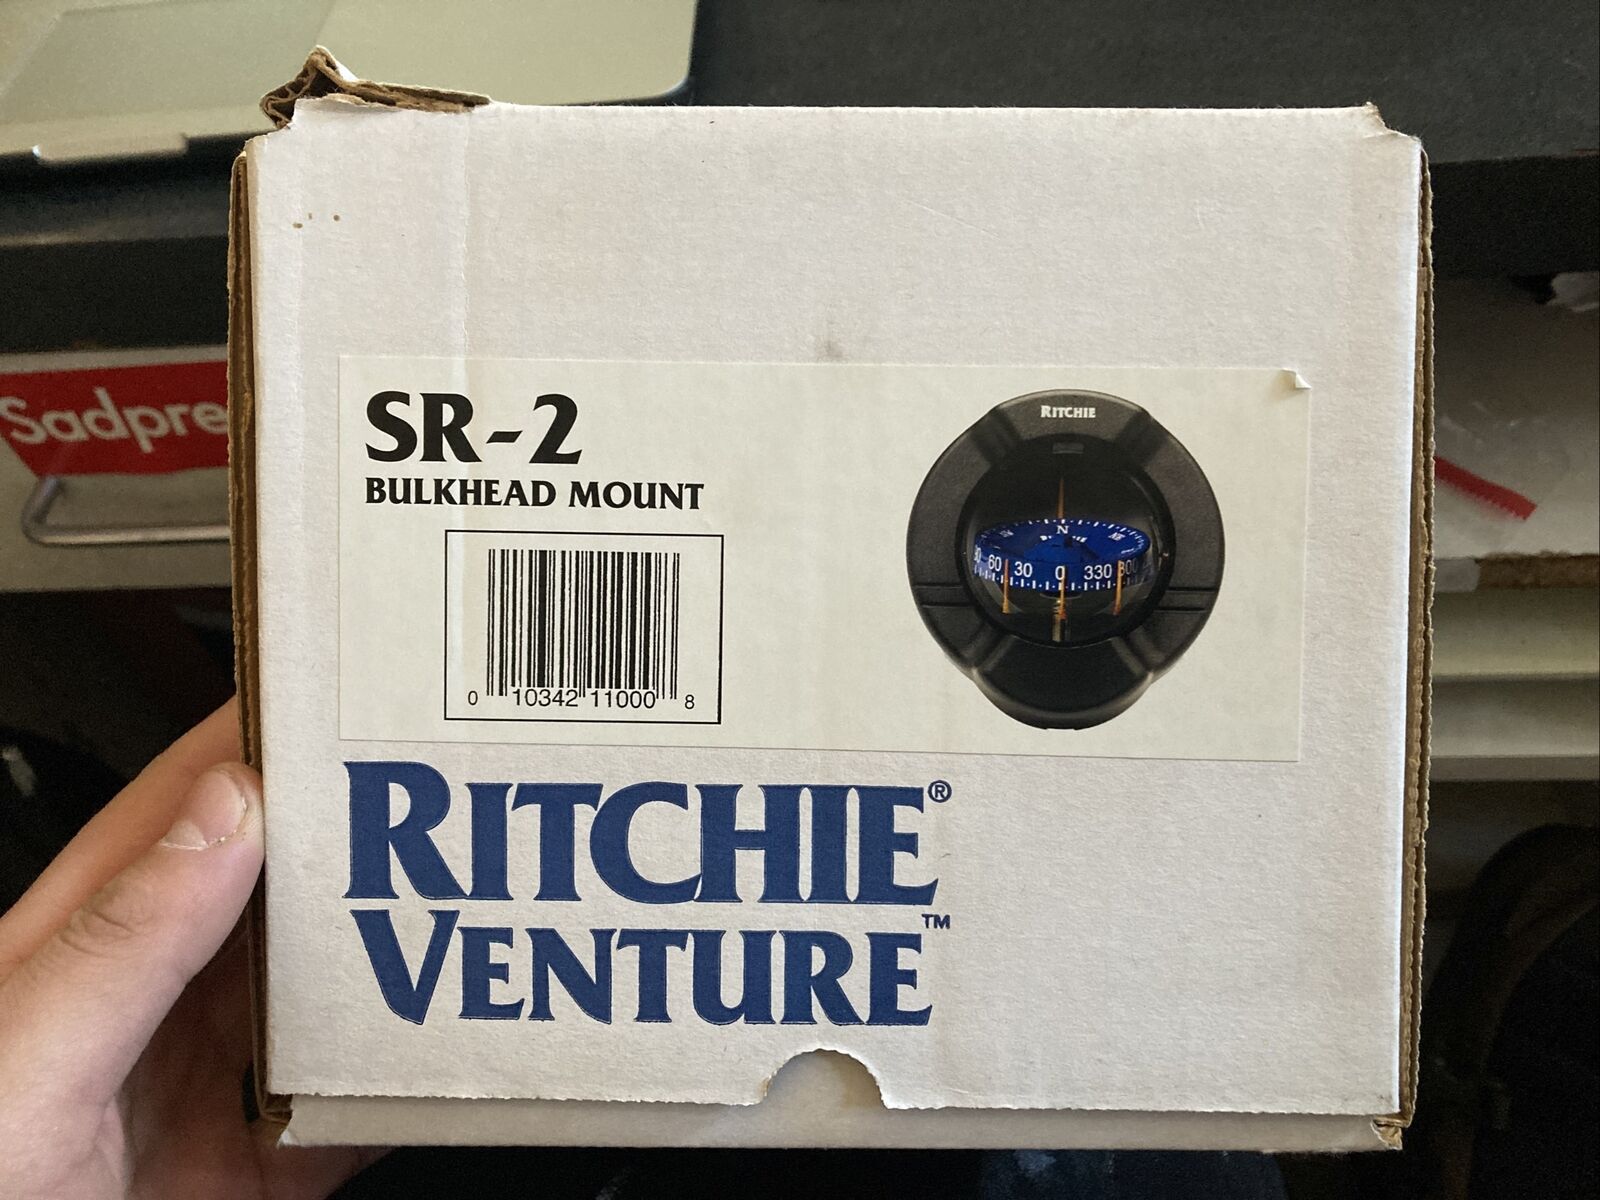 Ritchie Sr-2 Venture Bulkhead  Mount Compass New!!!